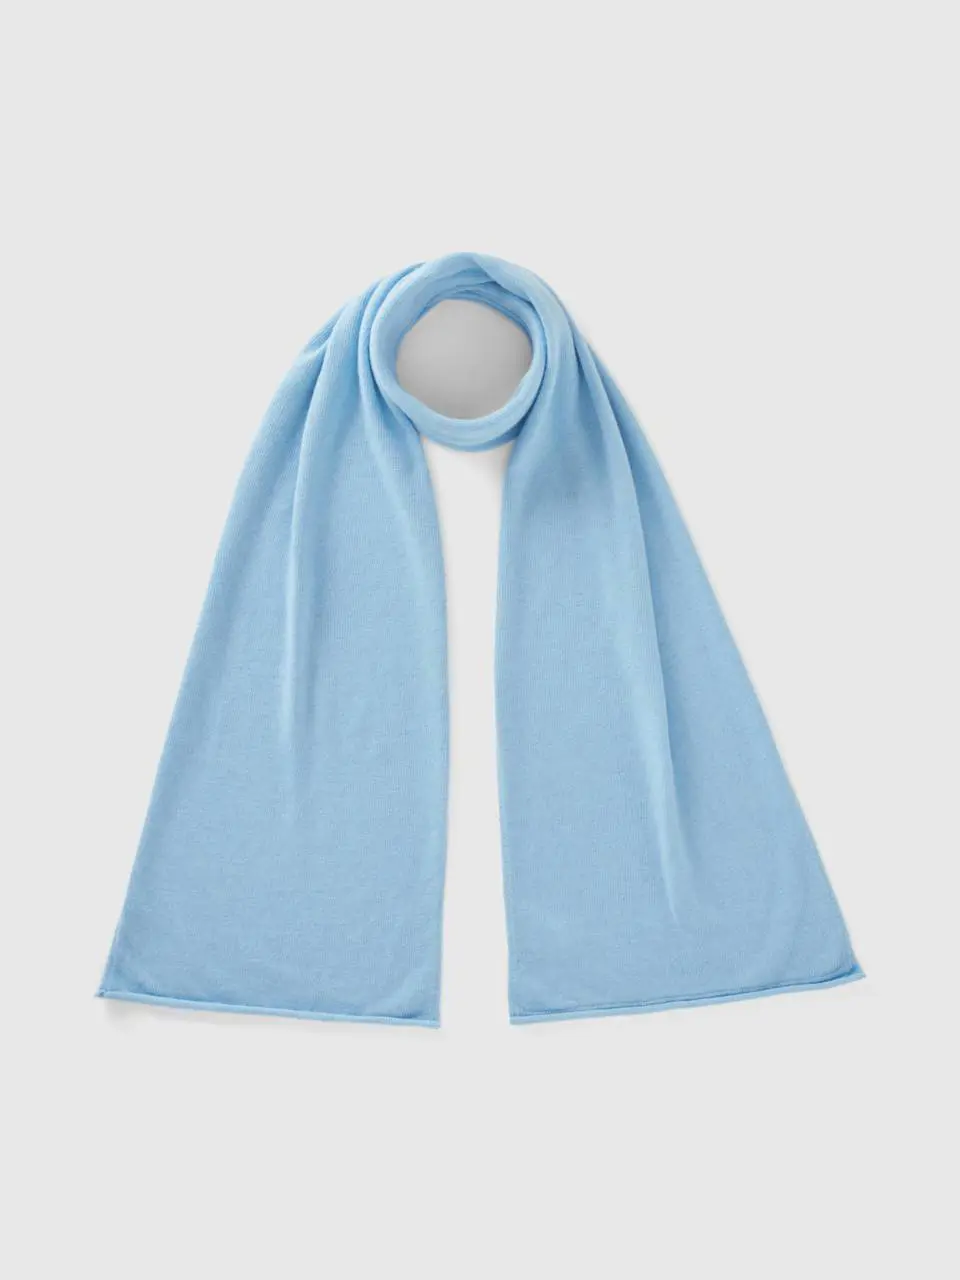 Benetton sky blue cashmere blend scarf. 1